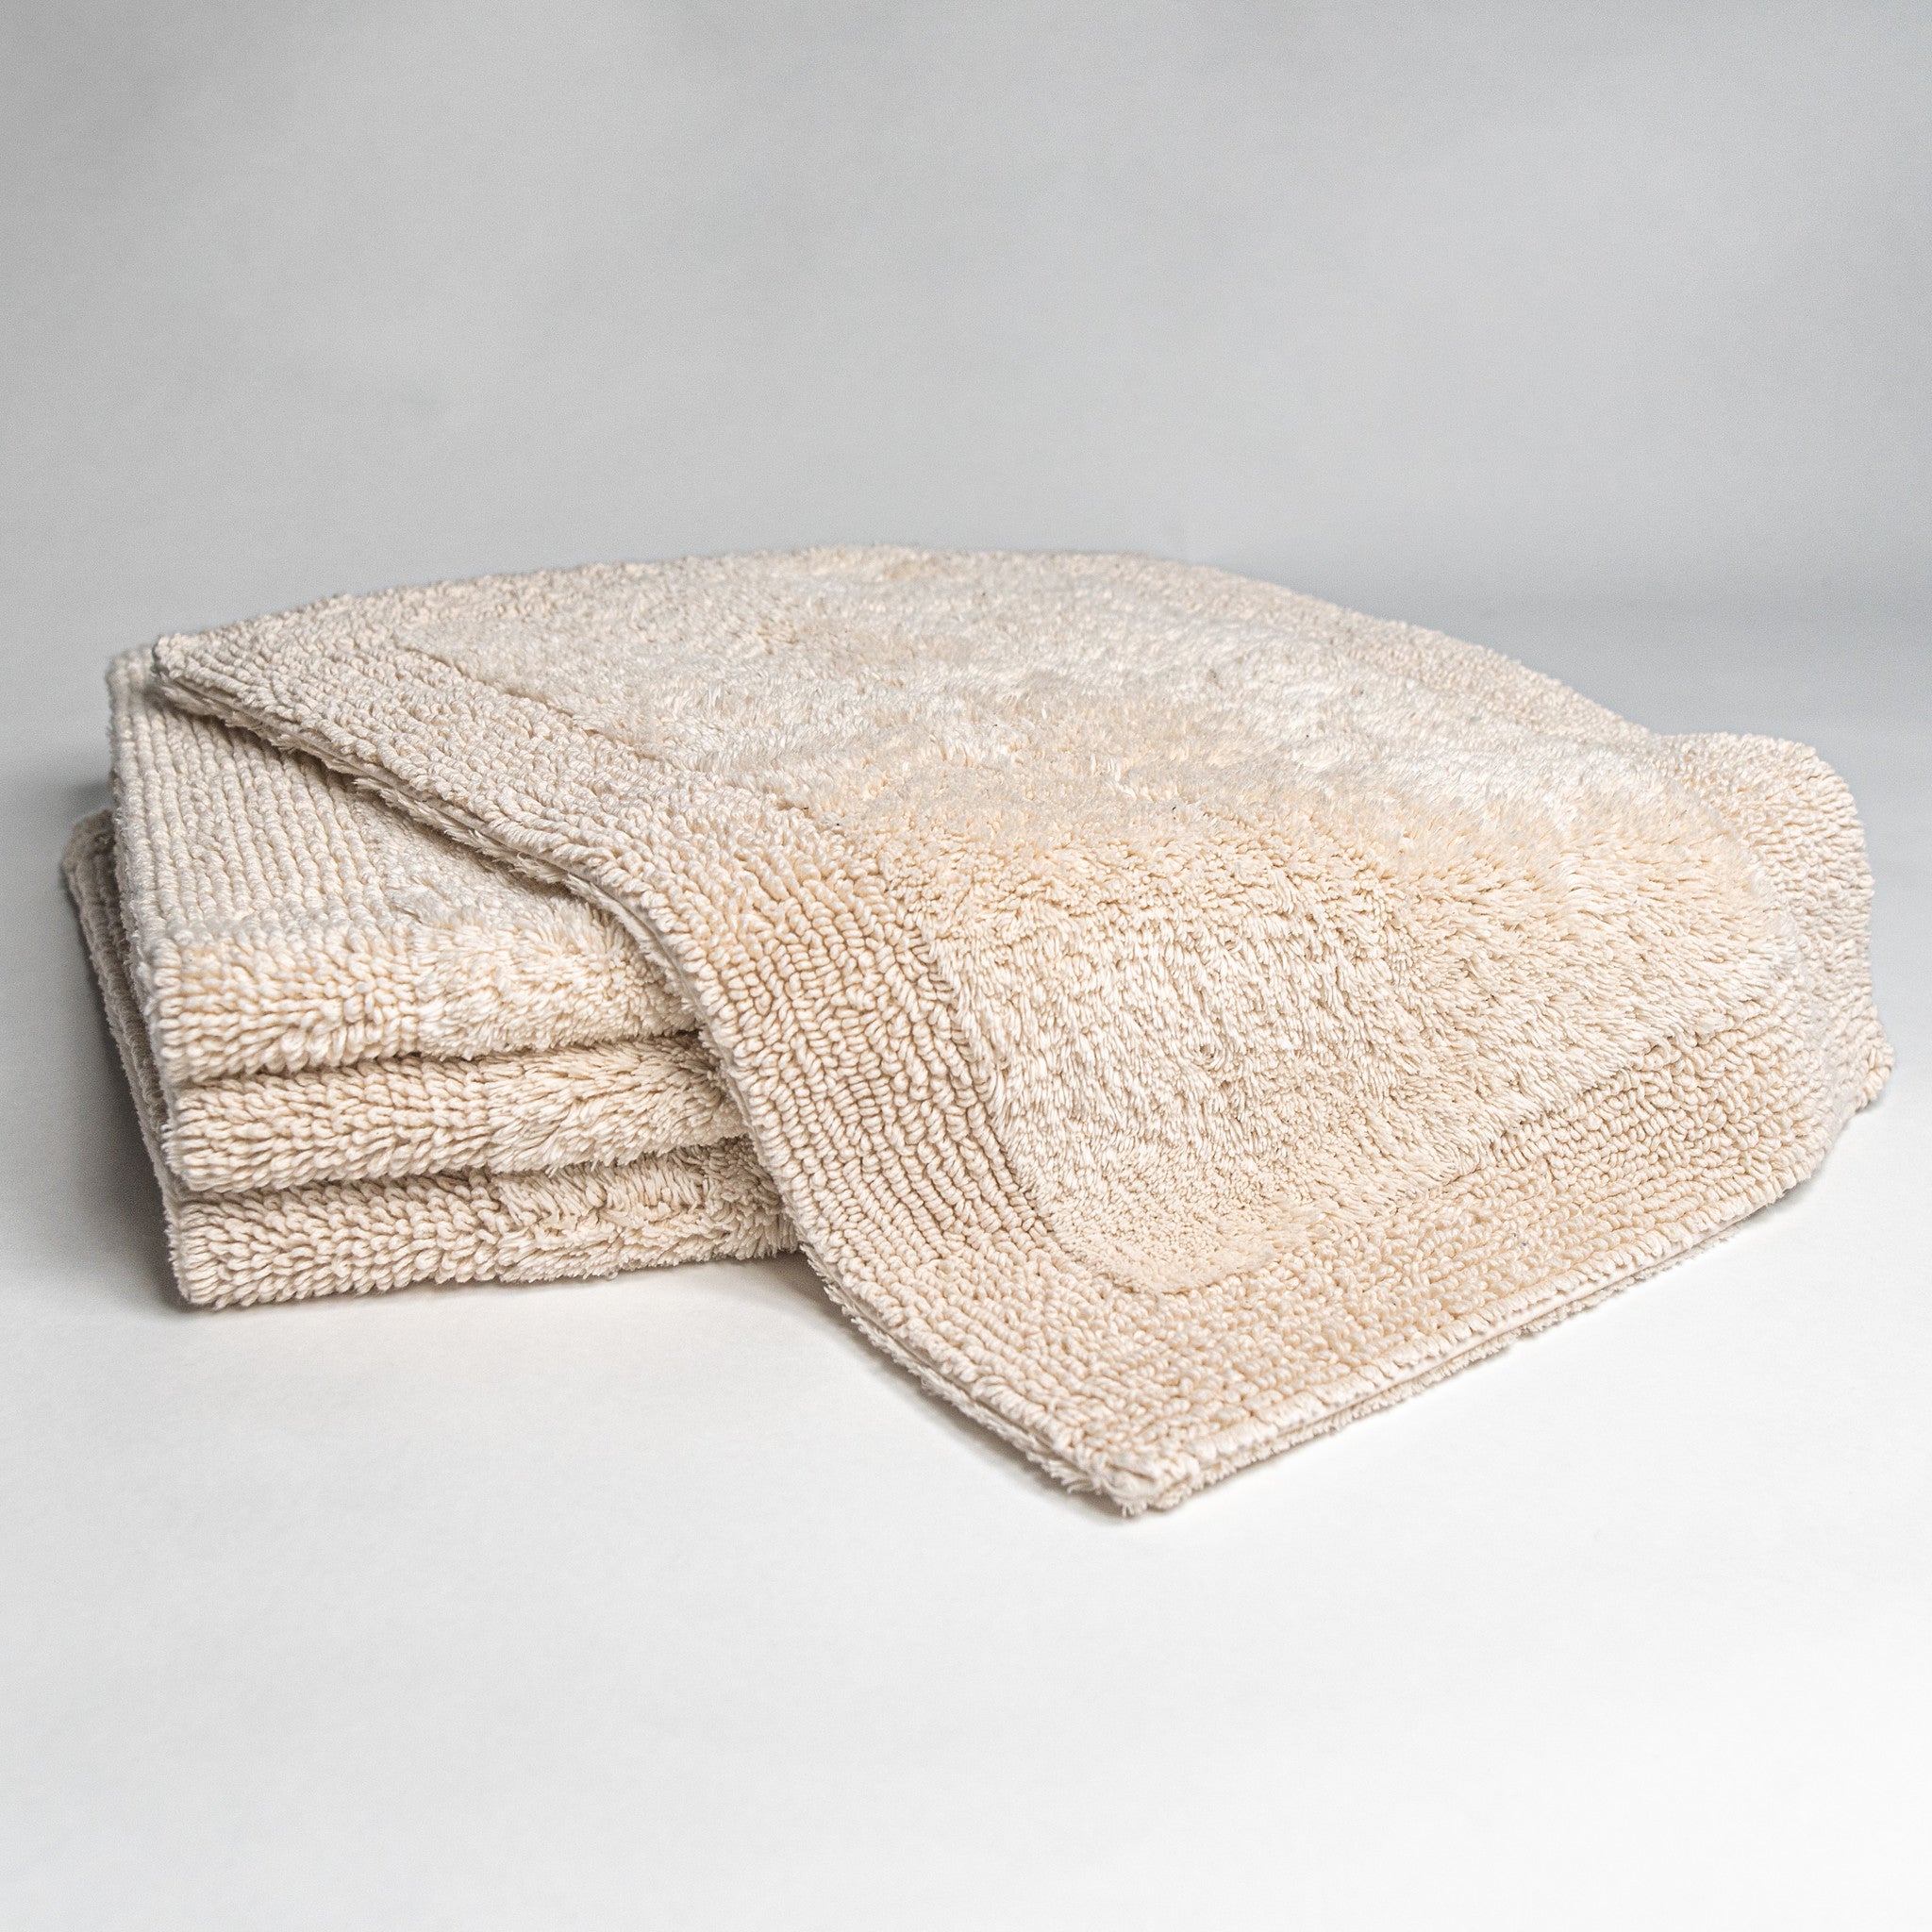 Puro Organic Cotton Reversible Bath Rug Collection